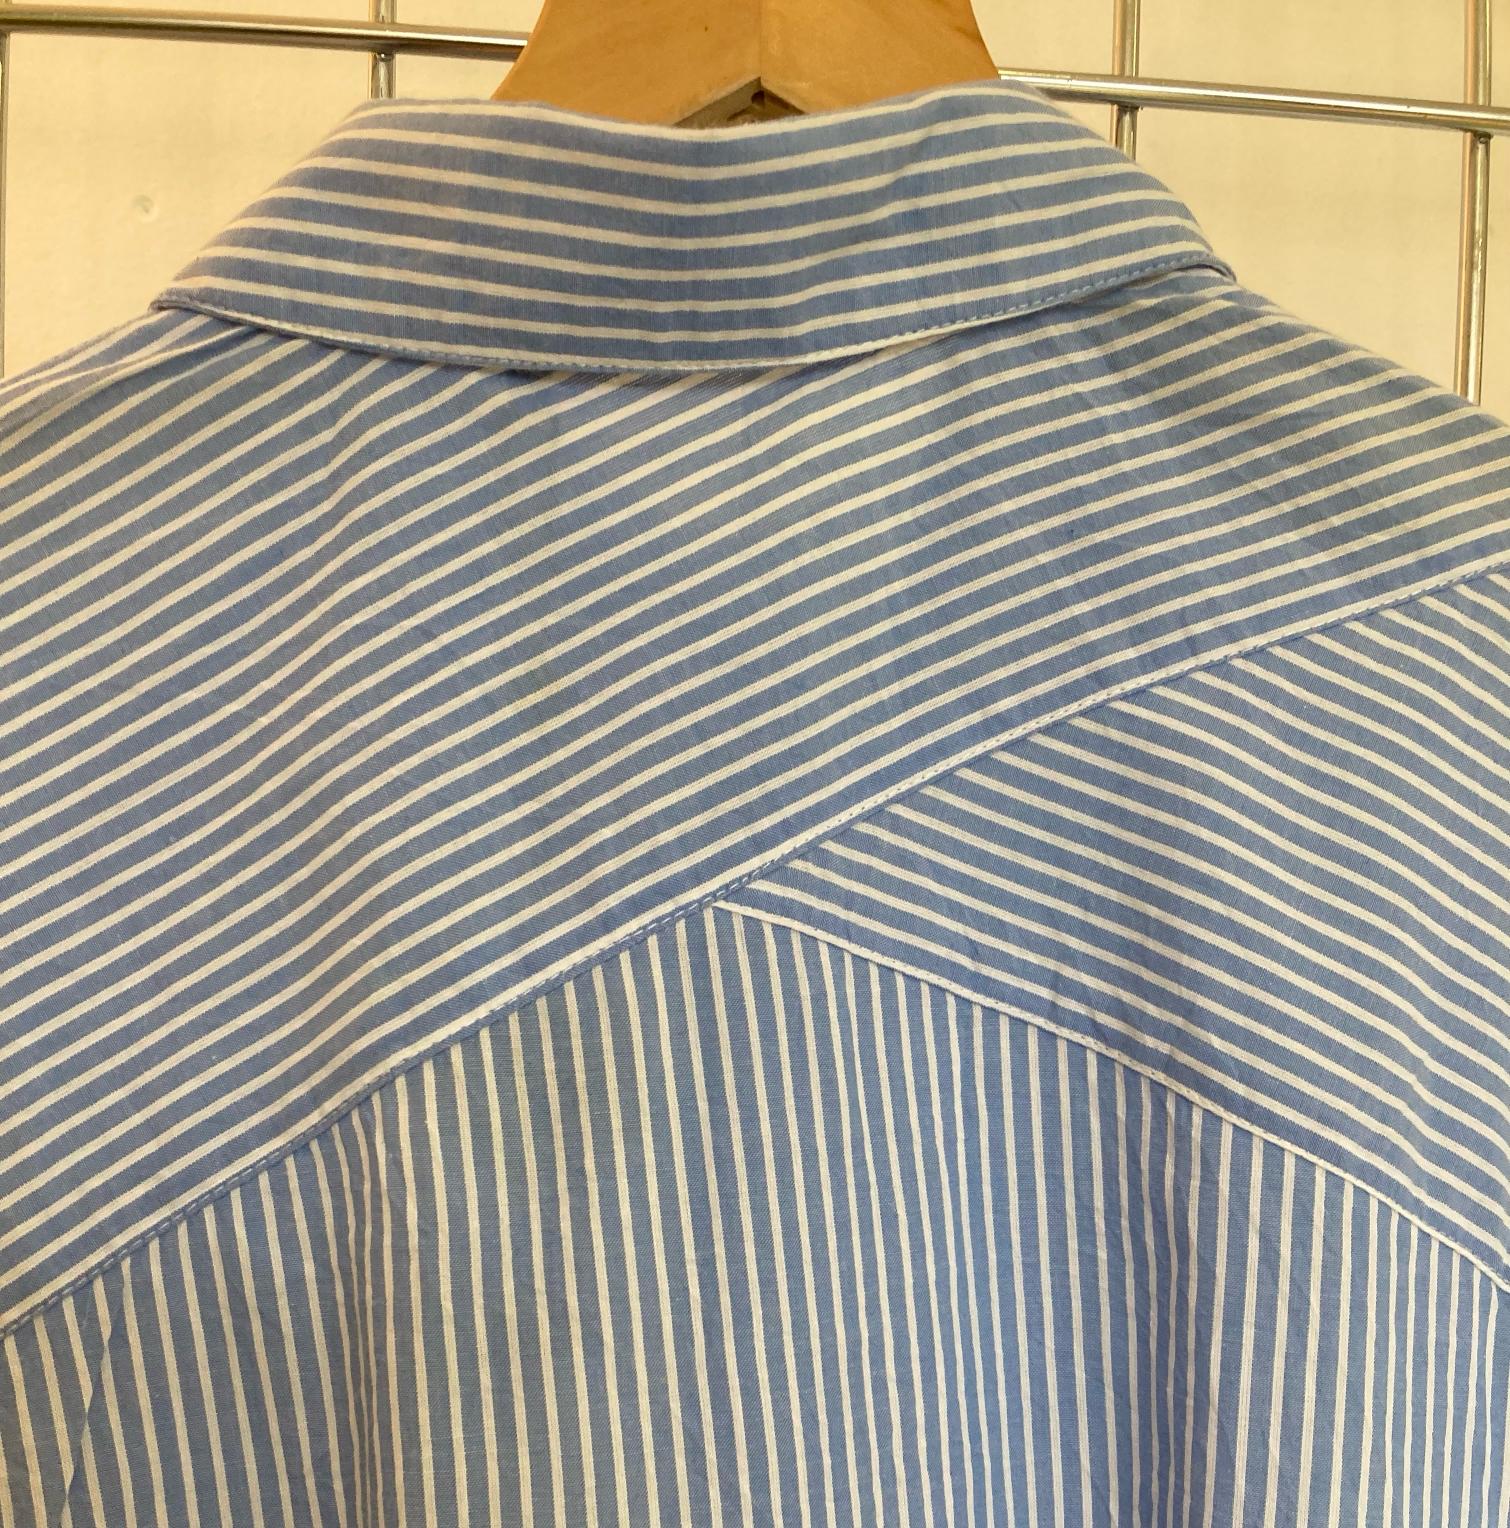 Cotton stripe shirt - Maya Maya Ltd